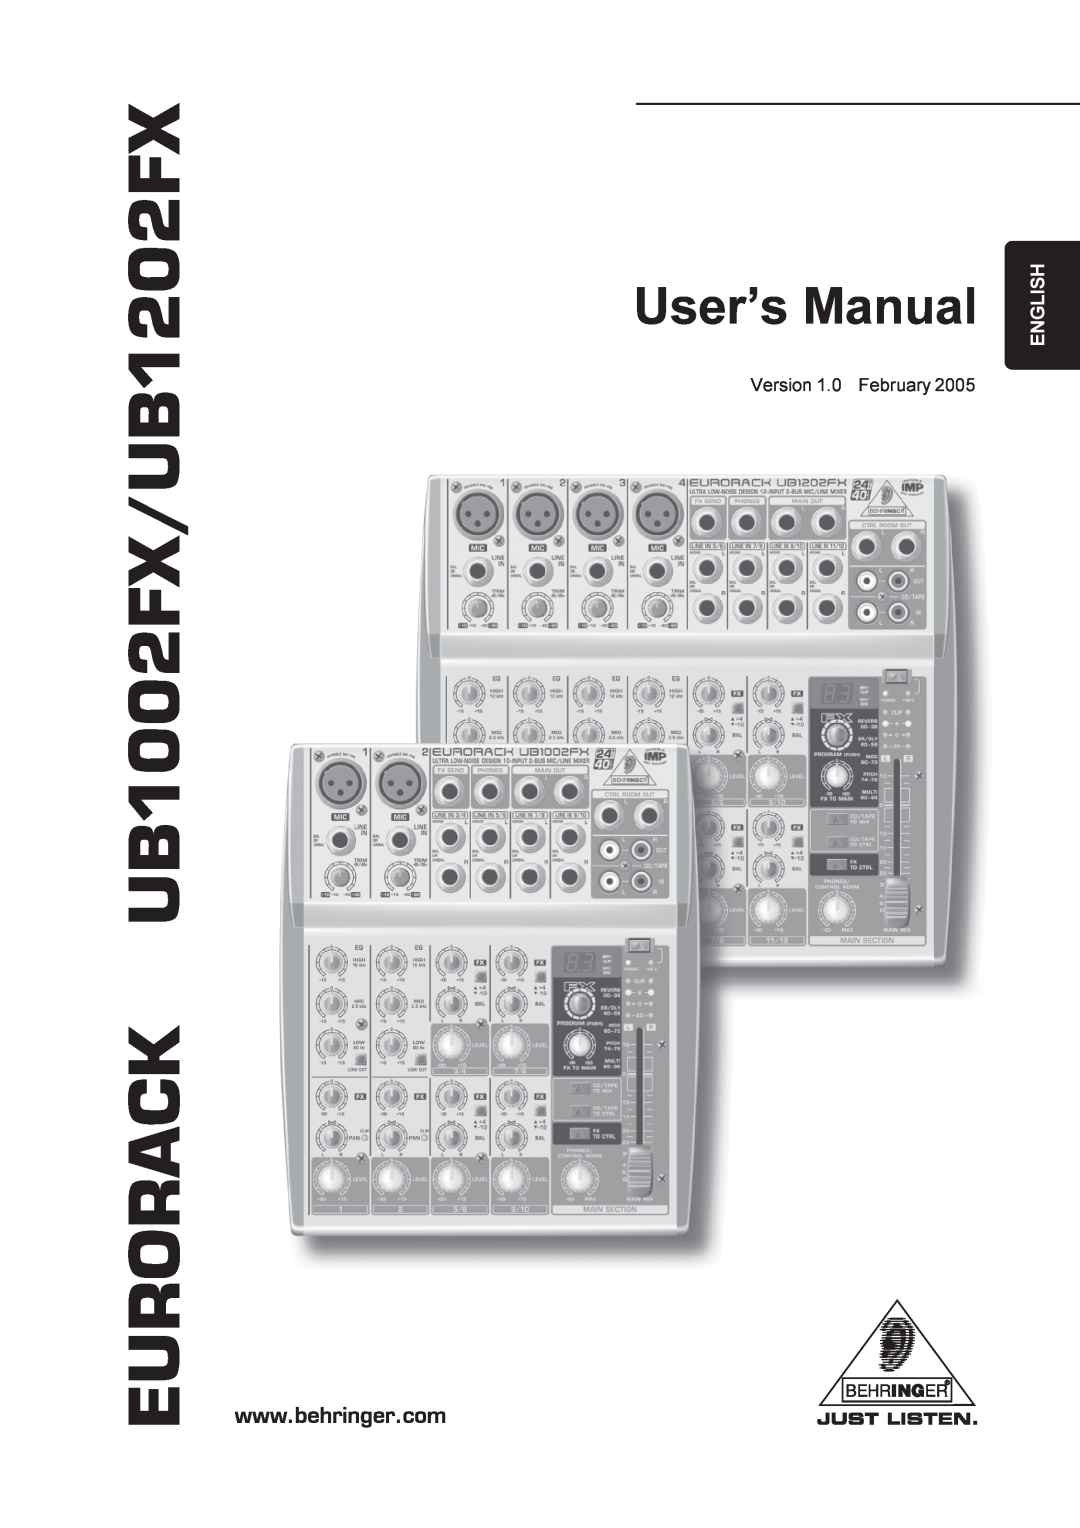 Behringer manual Version 1.0 February, EURORACK UB1002FX/UB1202FX, User’s Manual, English 